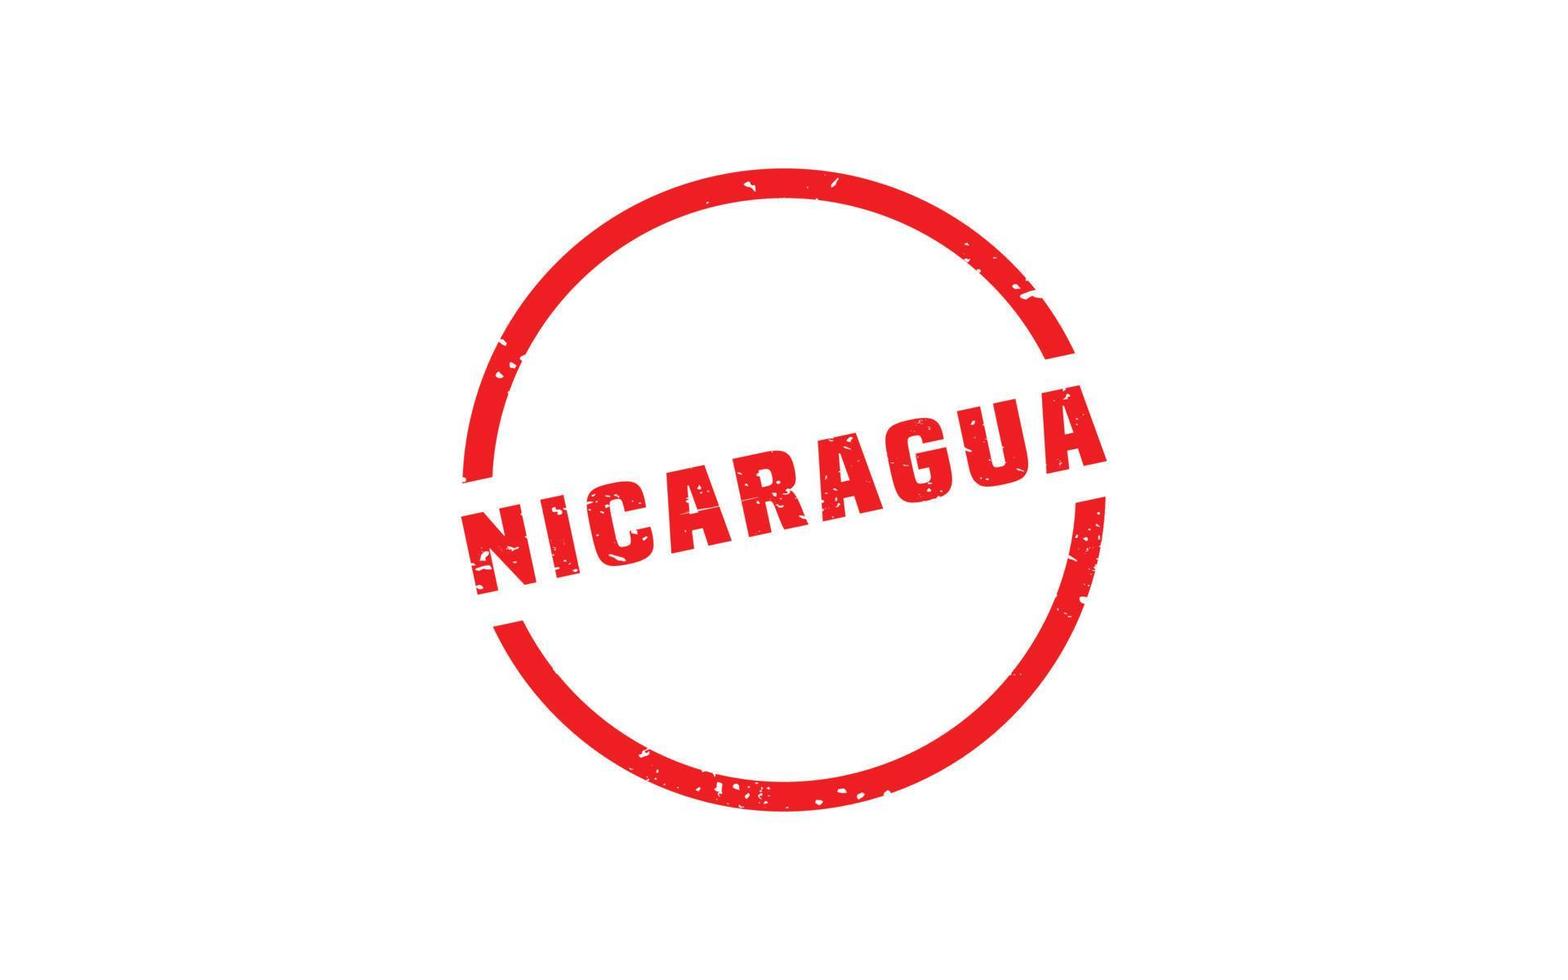 borracha de carimbo da Nicarágua com estilo grunge em fundo branco vetor